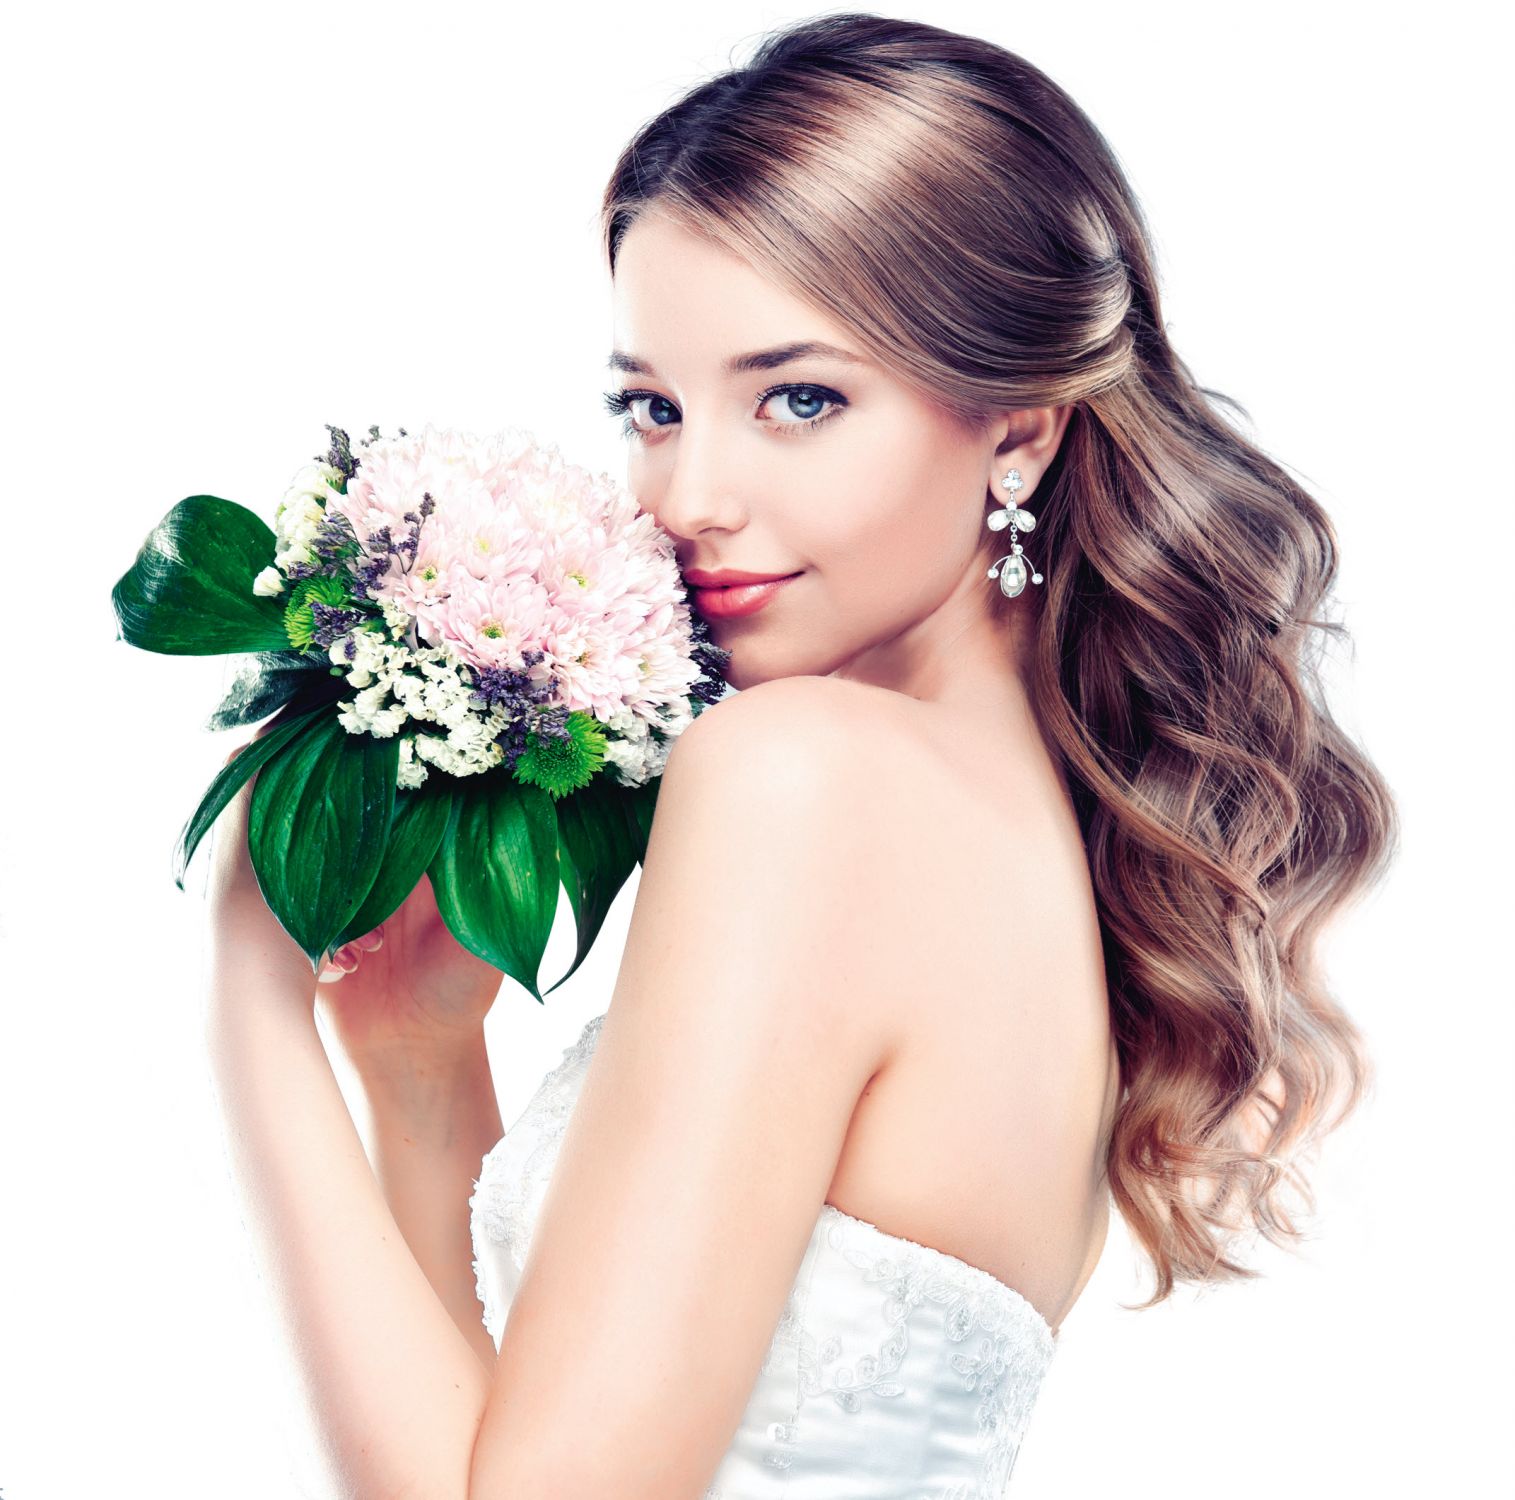 bigstock-Girl-bride-in-wedding-dress-w-100139516